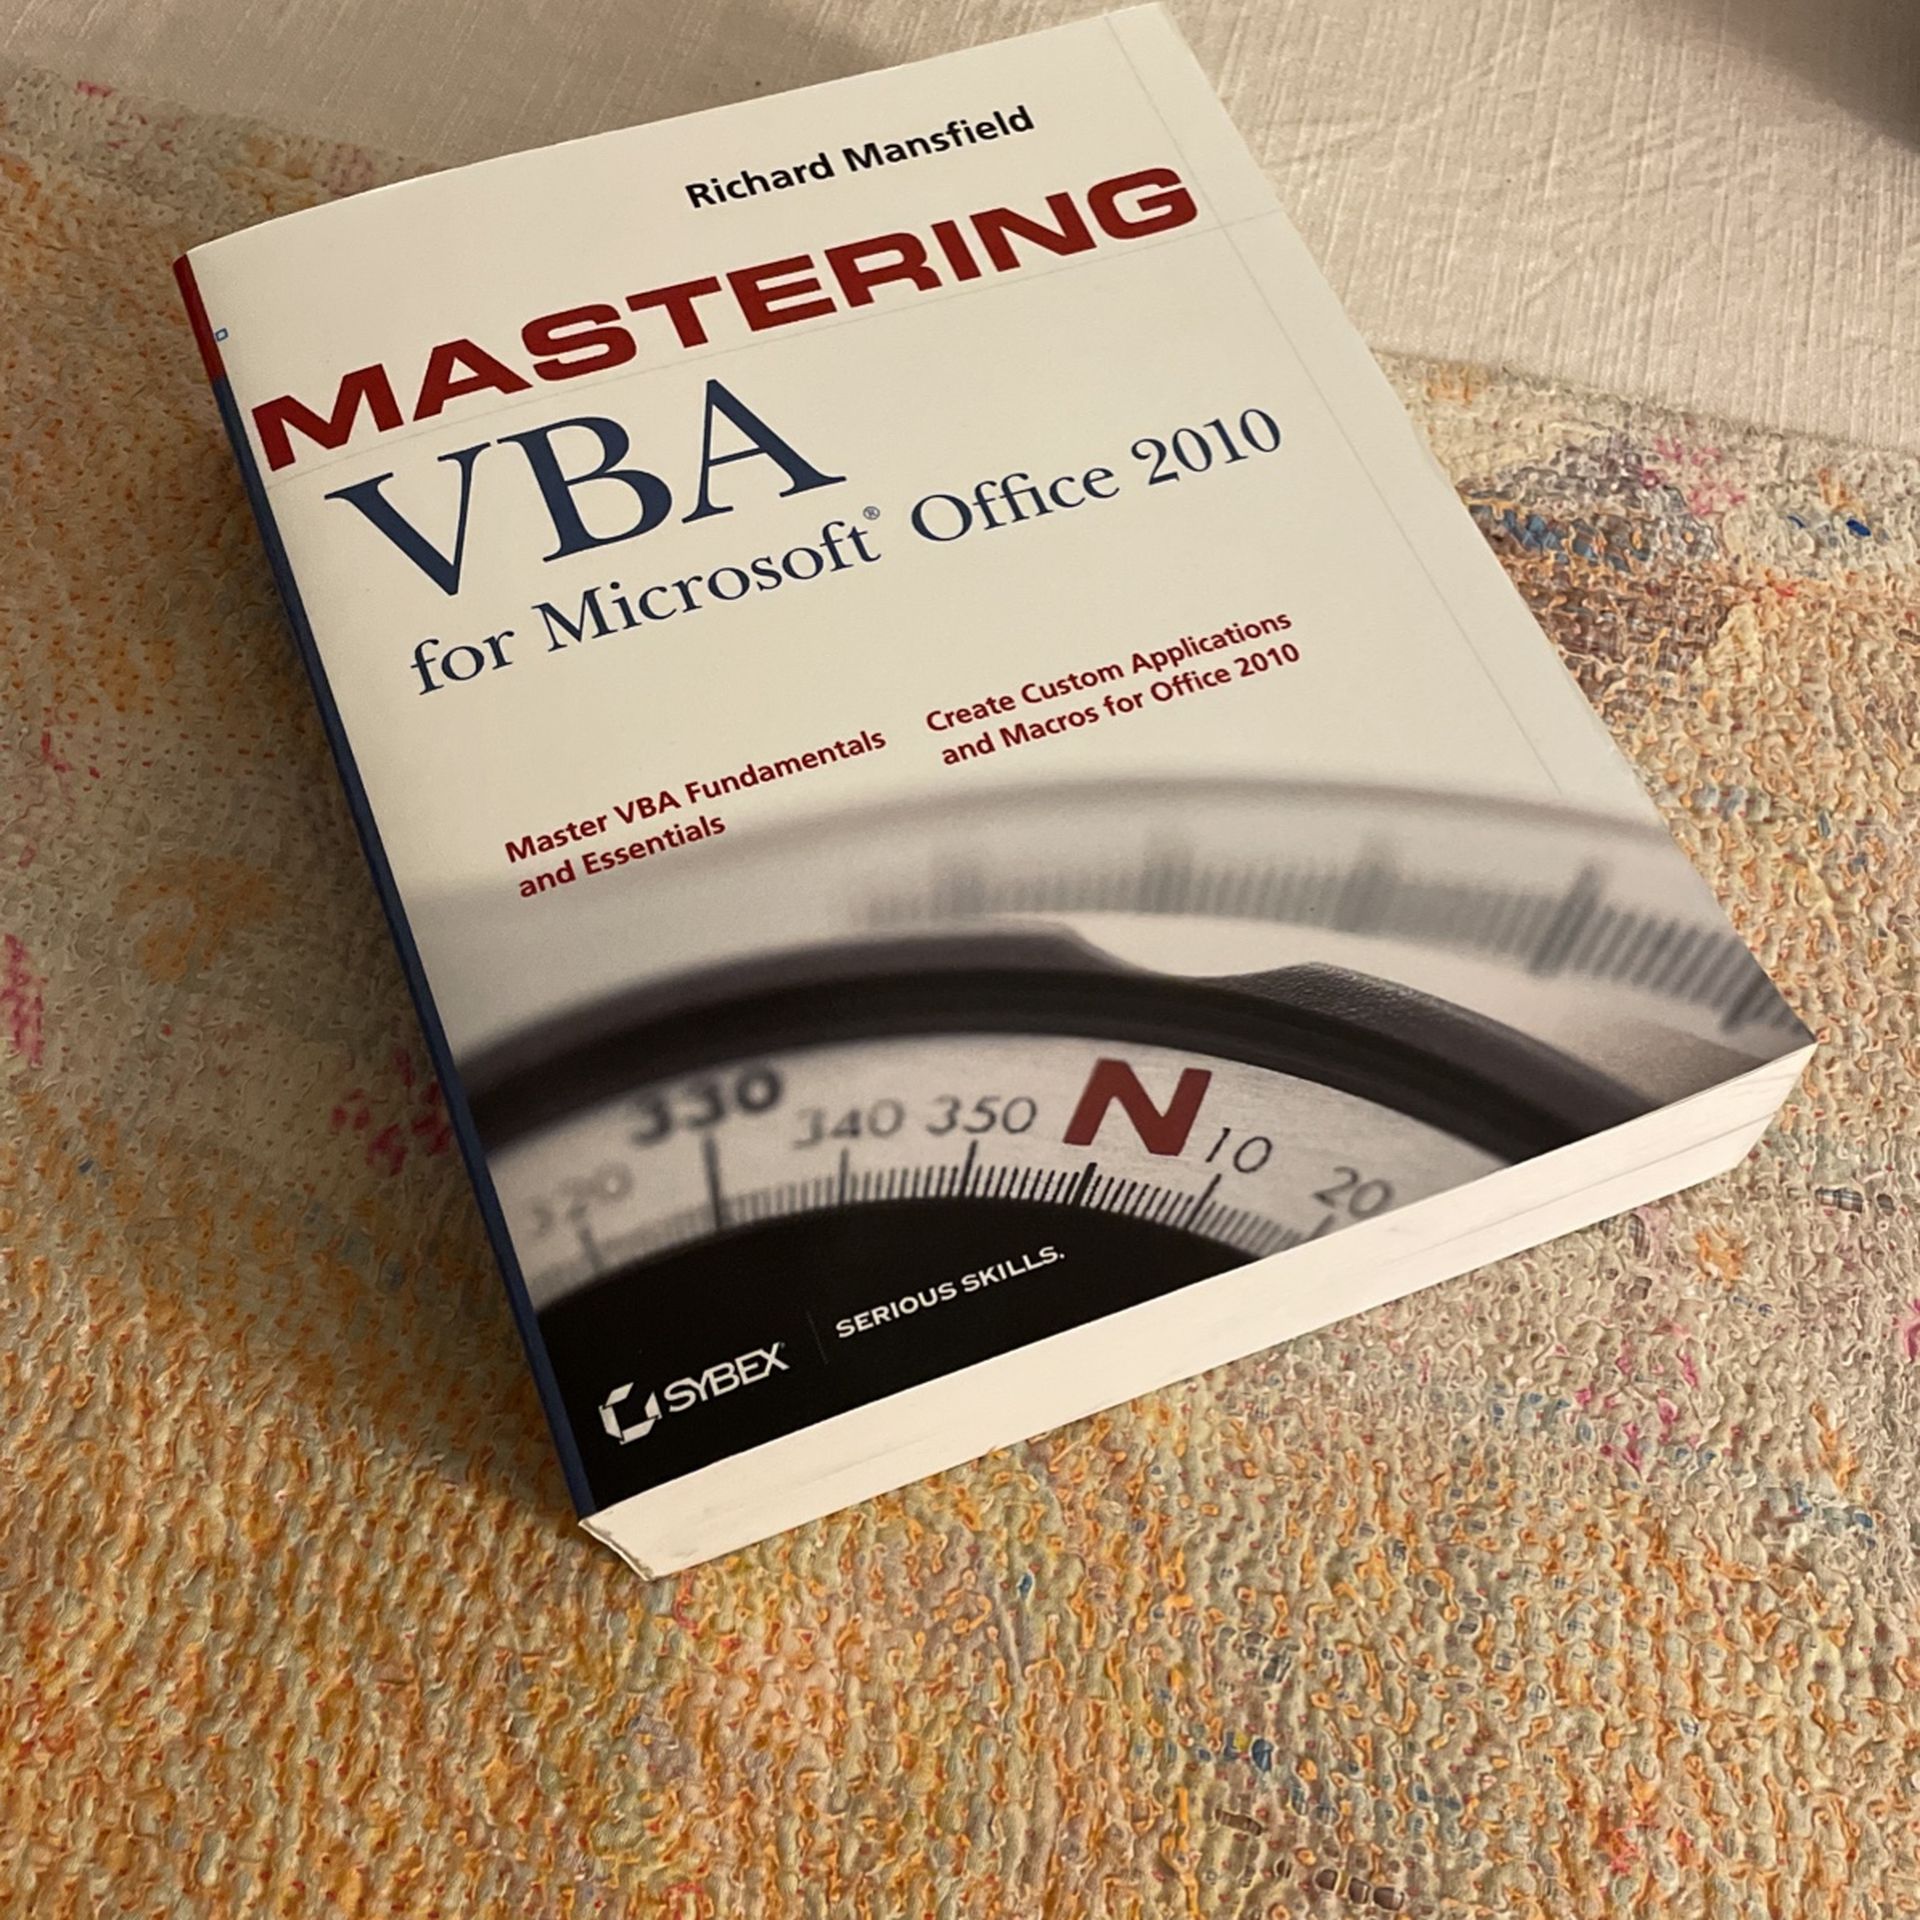 Mastering VBA Textbook